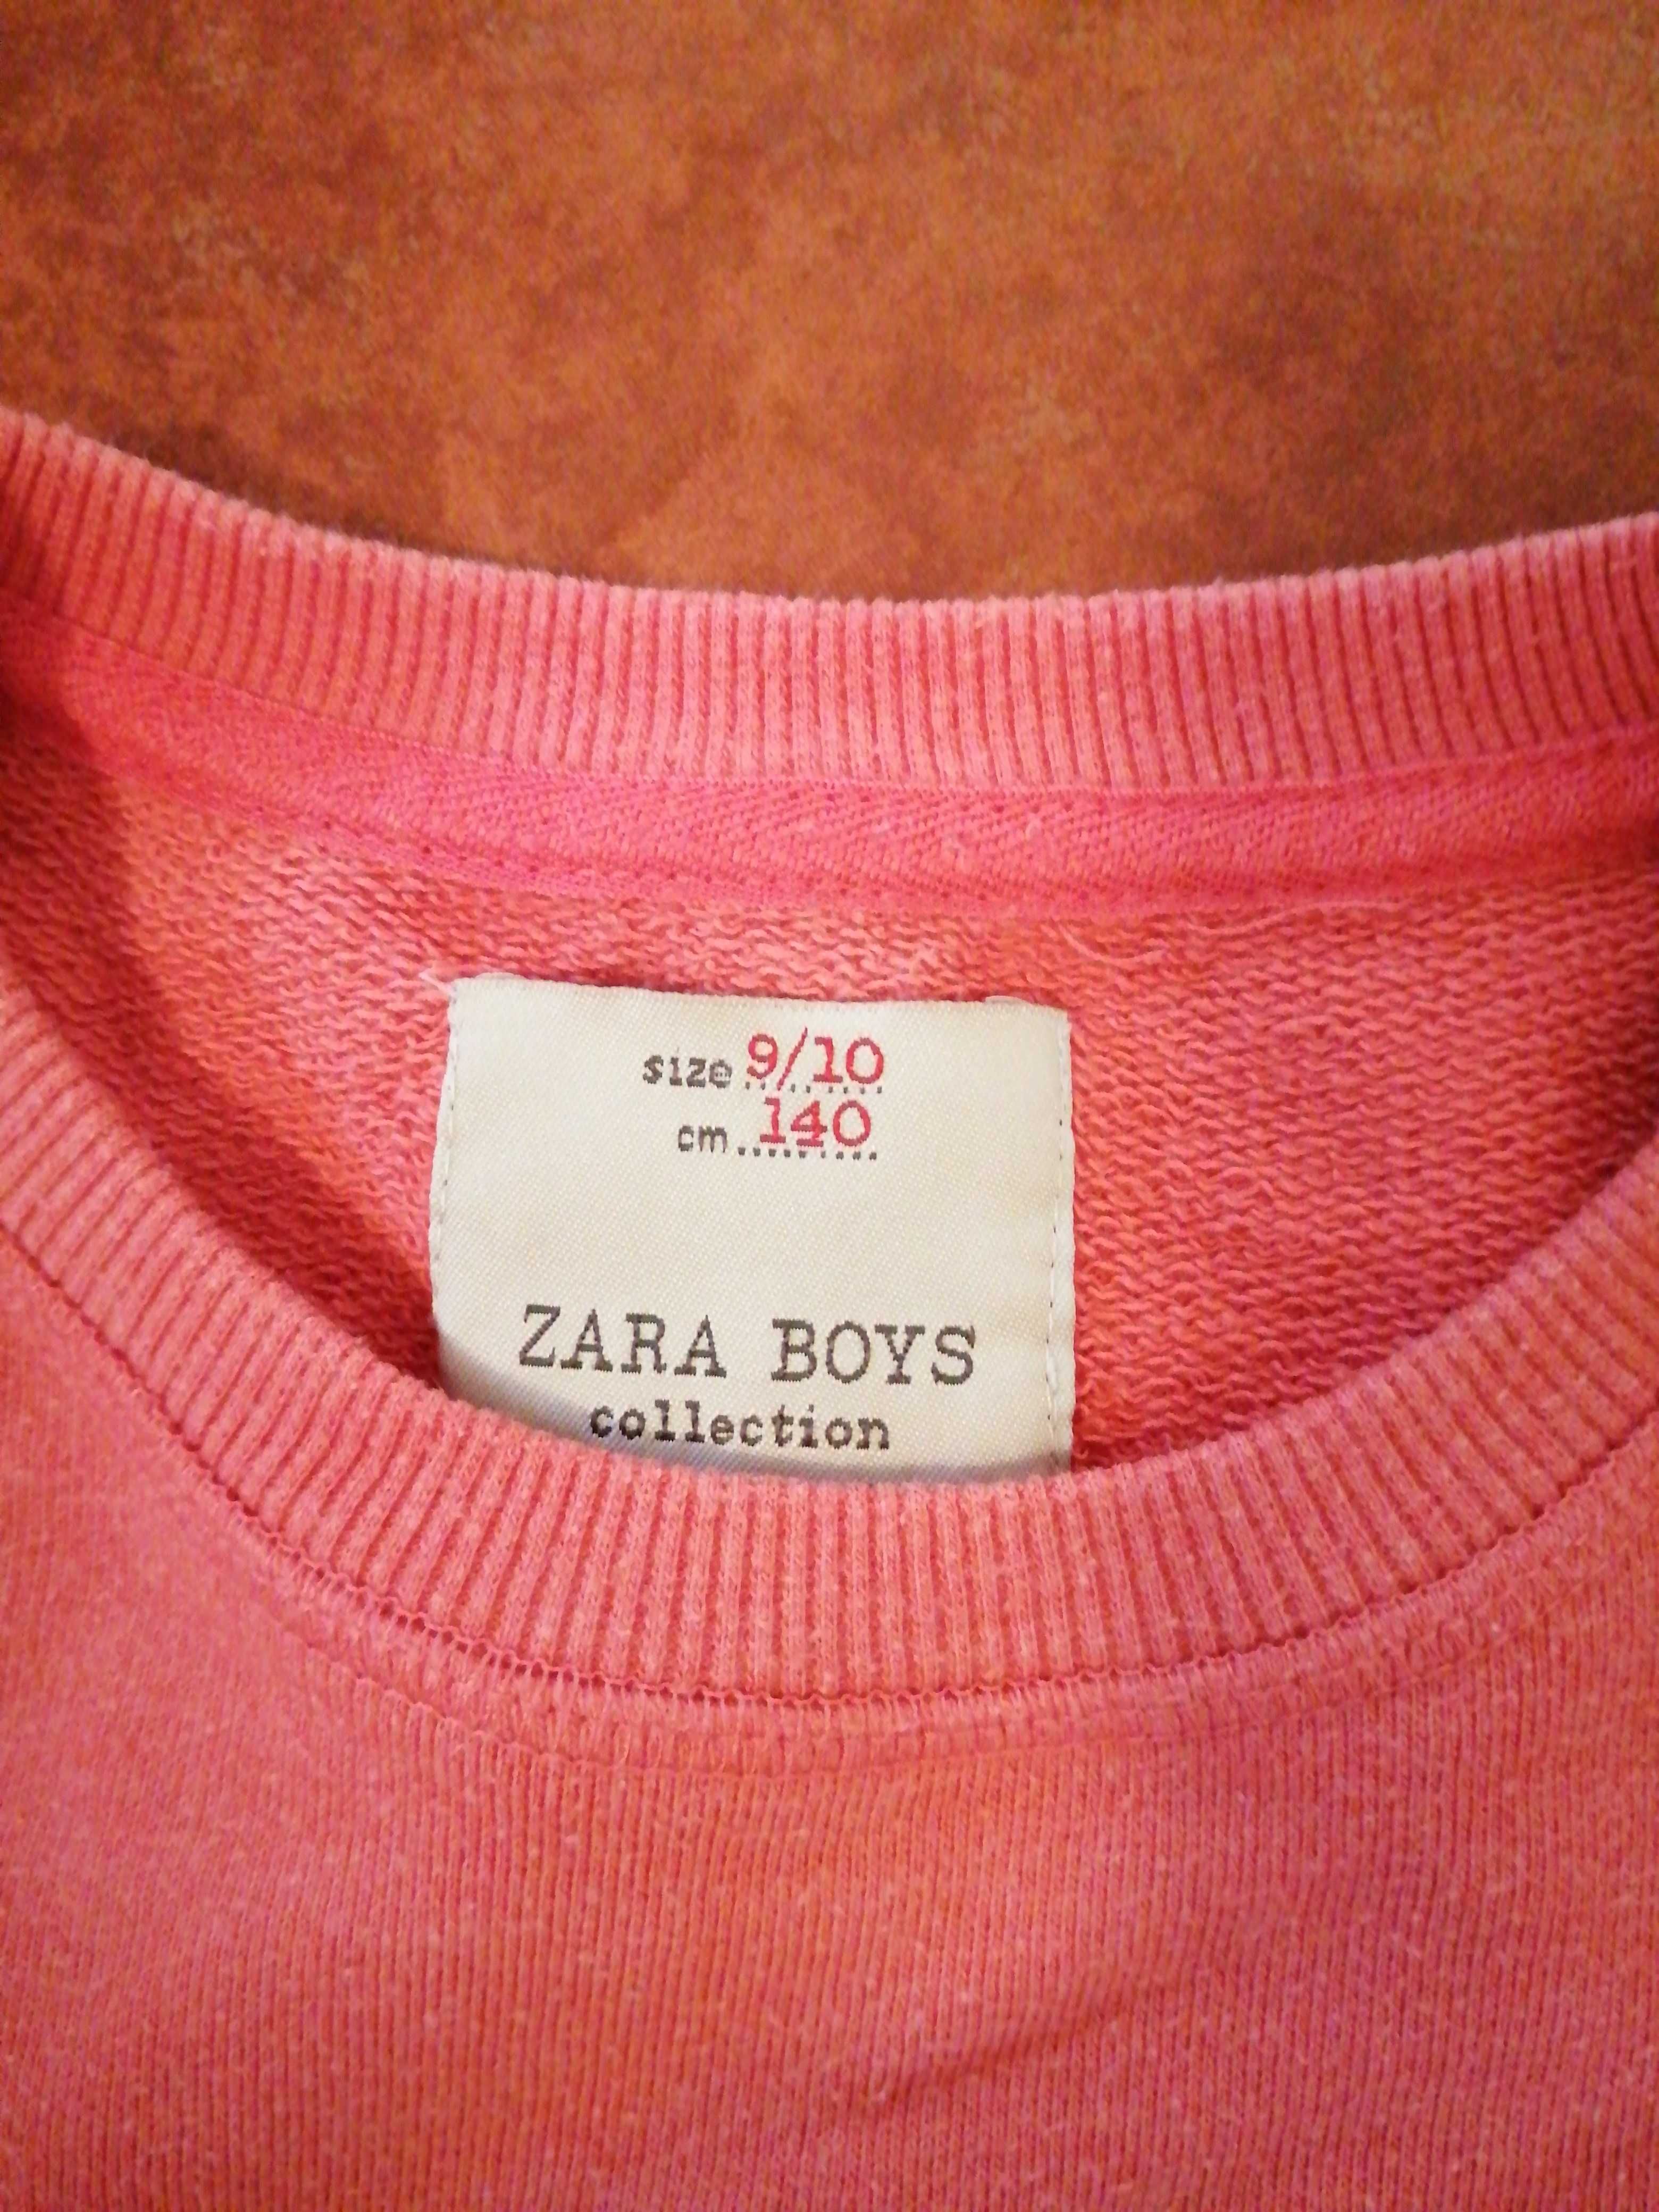 Camisola Zara boys 9/10 anos